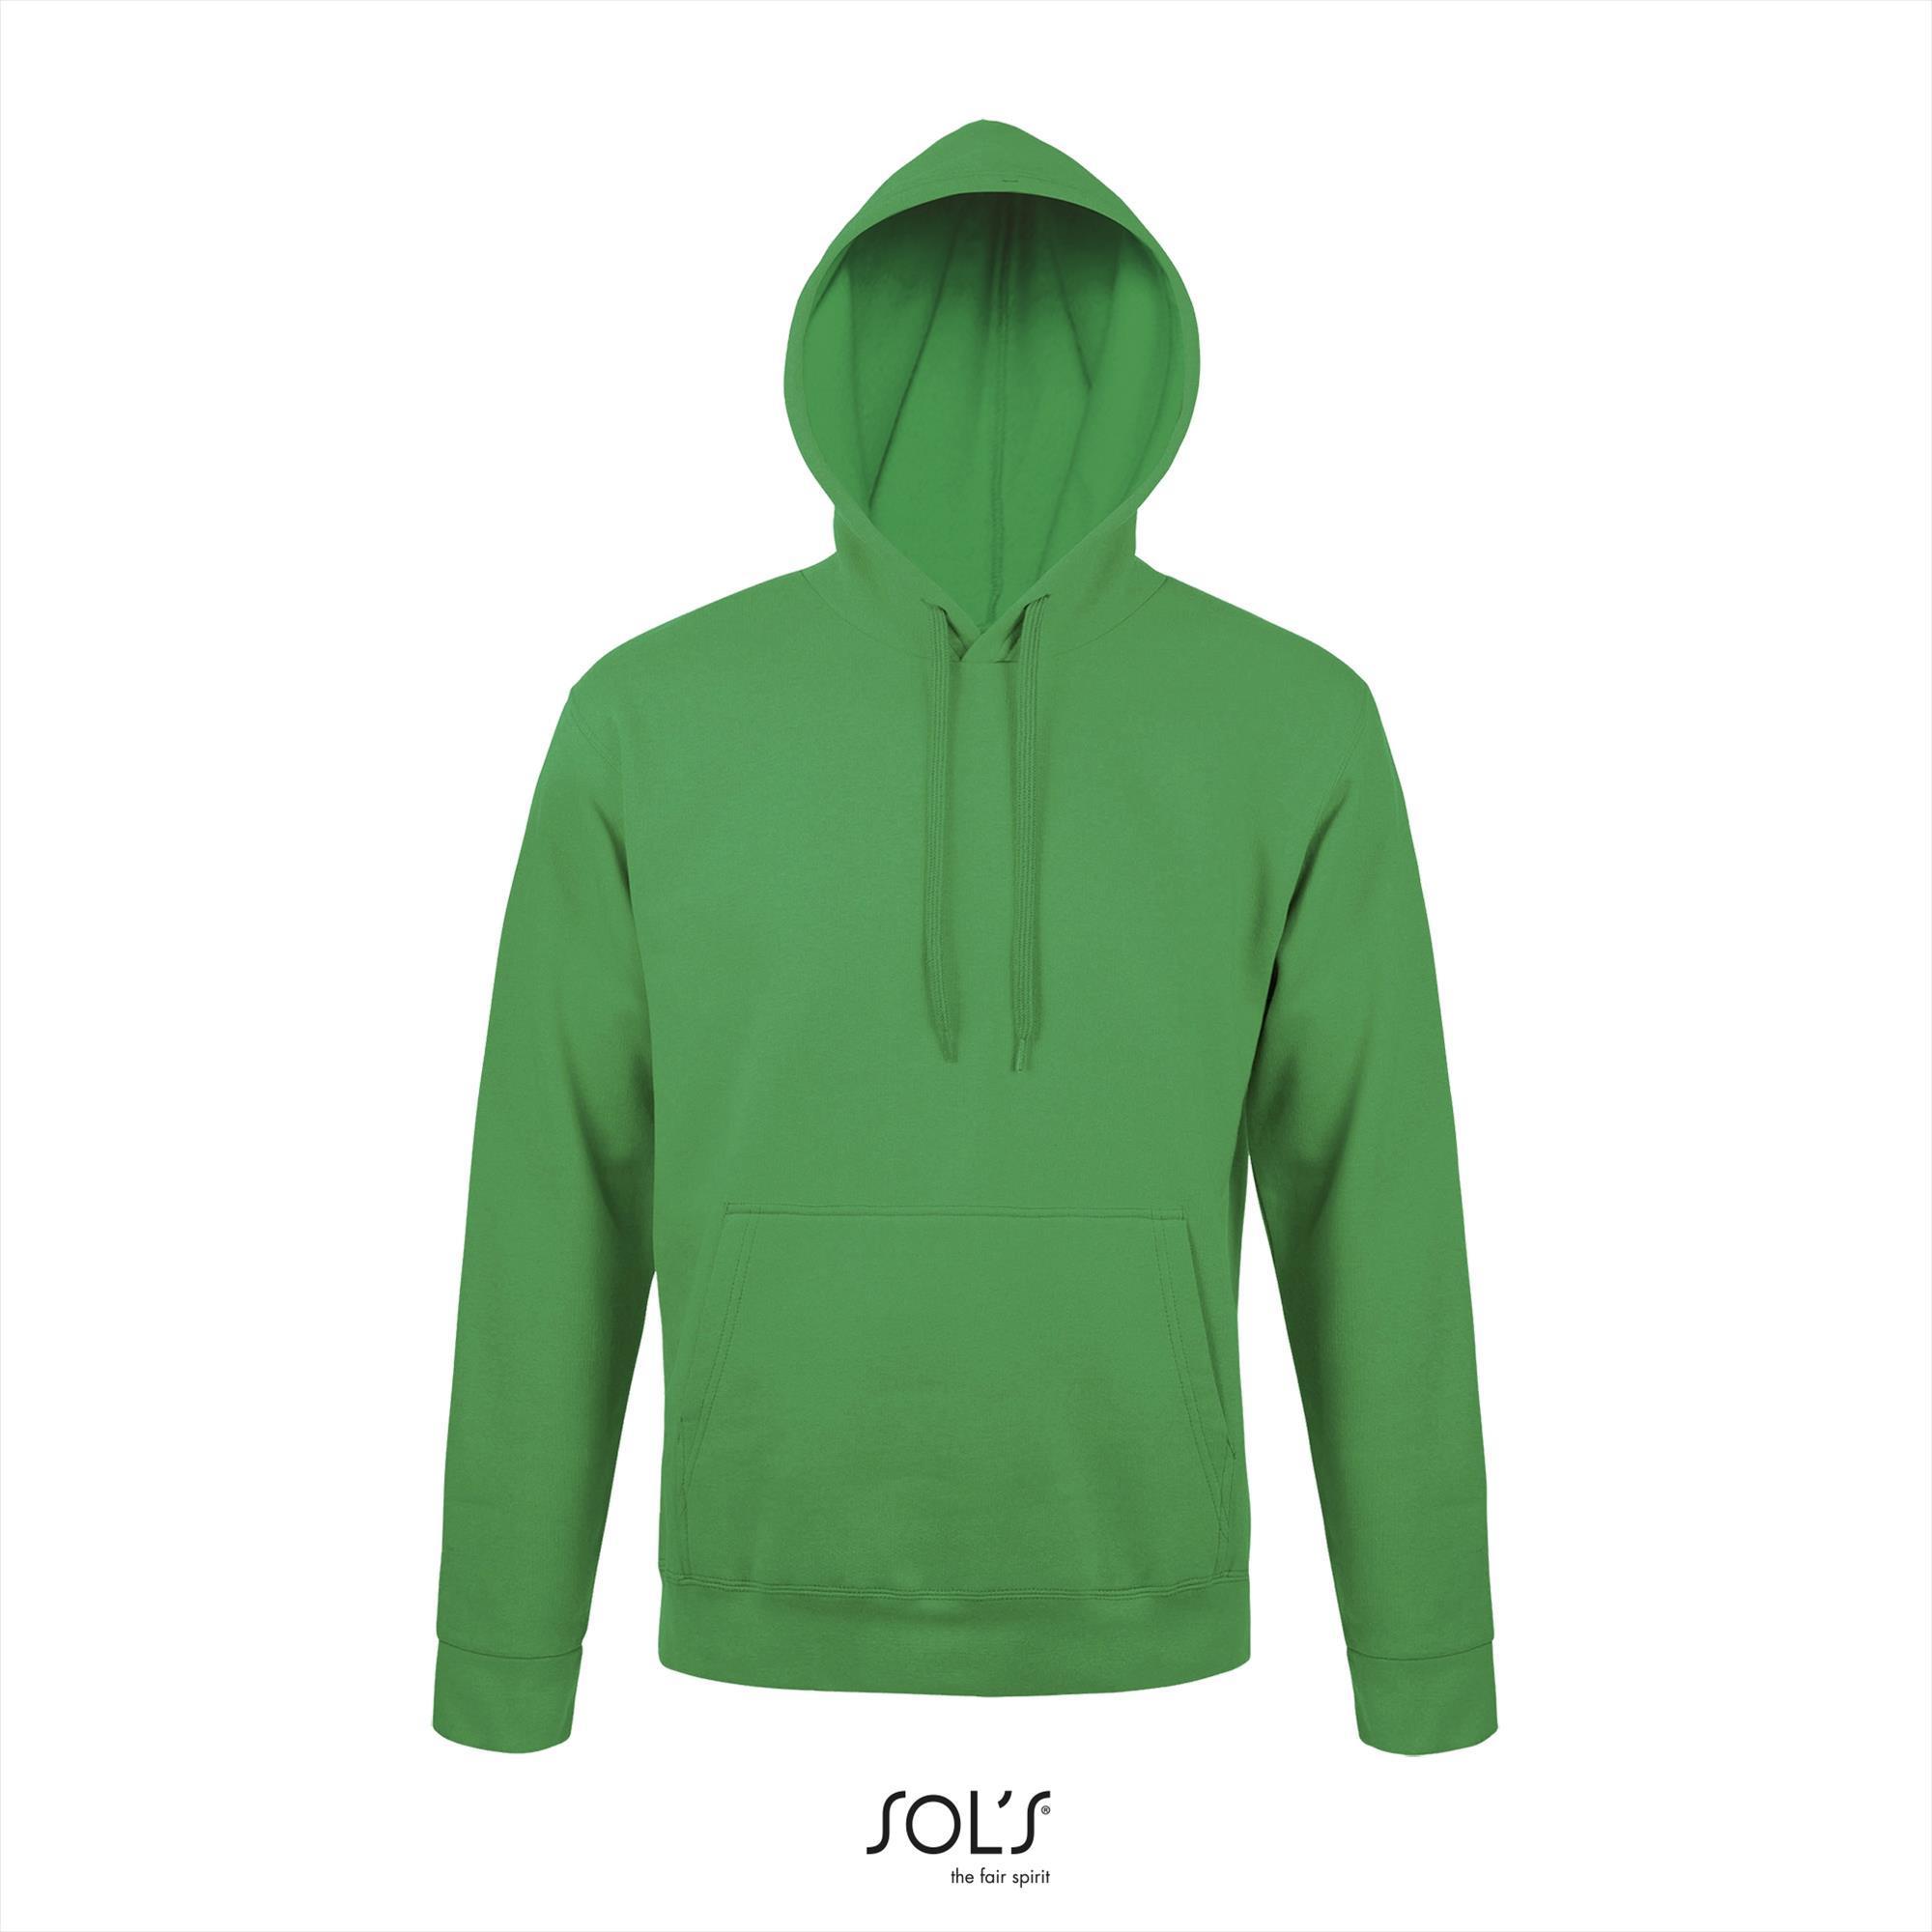 Groene  hooded sweater voor mannen unisex groen